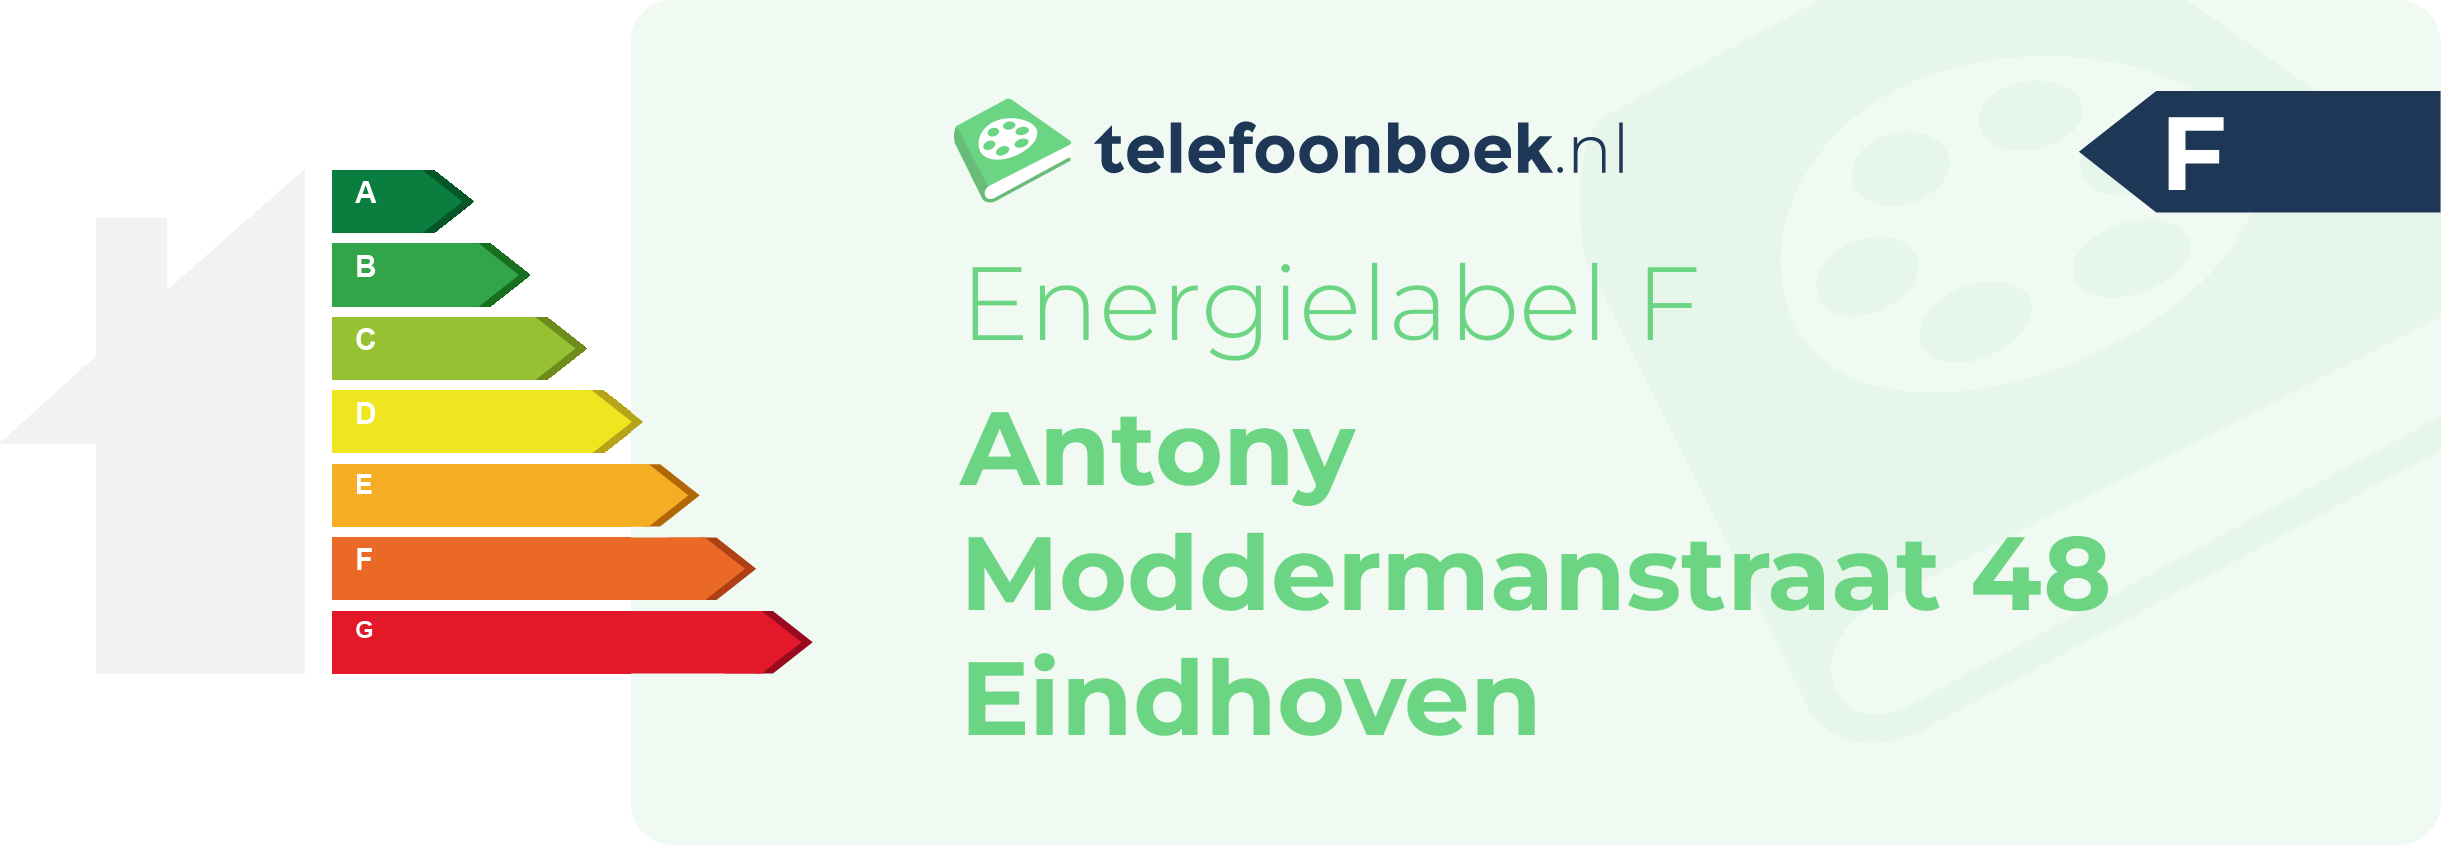 Energielabel Antony Moddermanstraat 48 Eindhoven